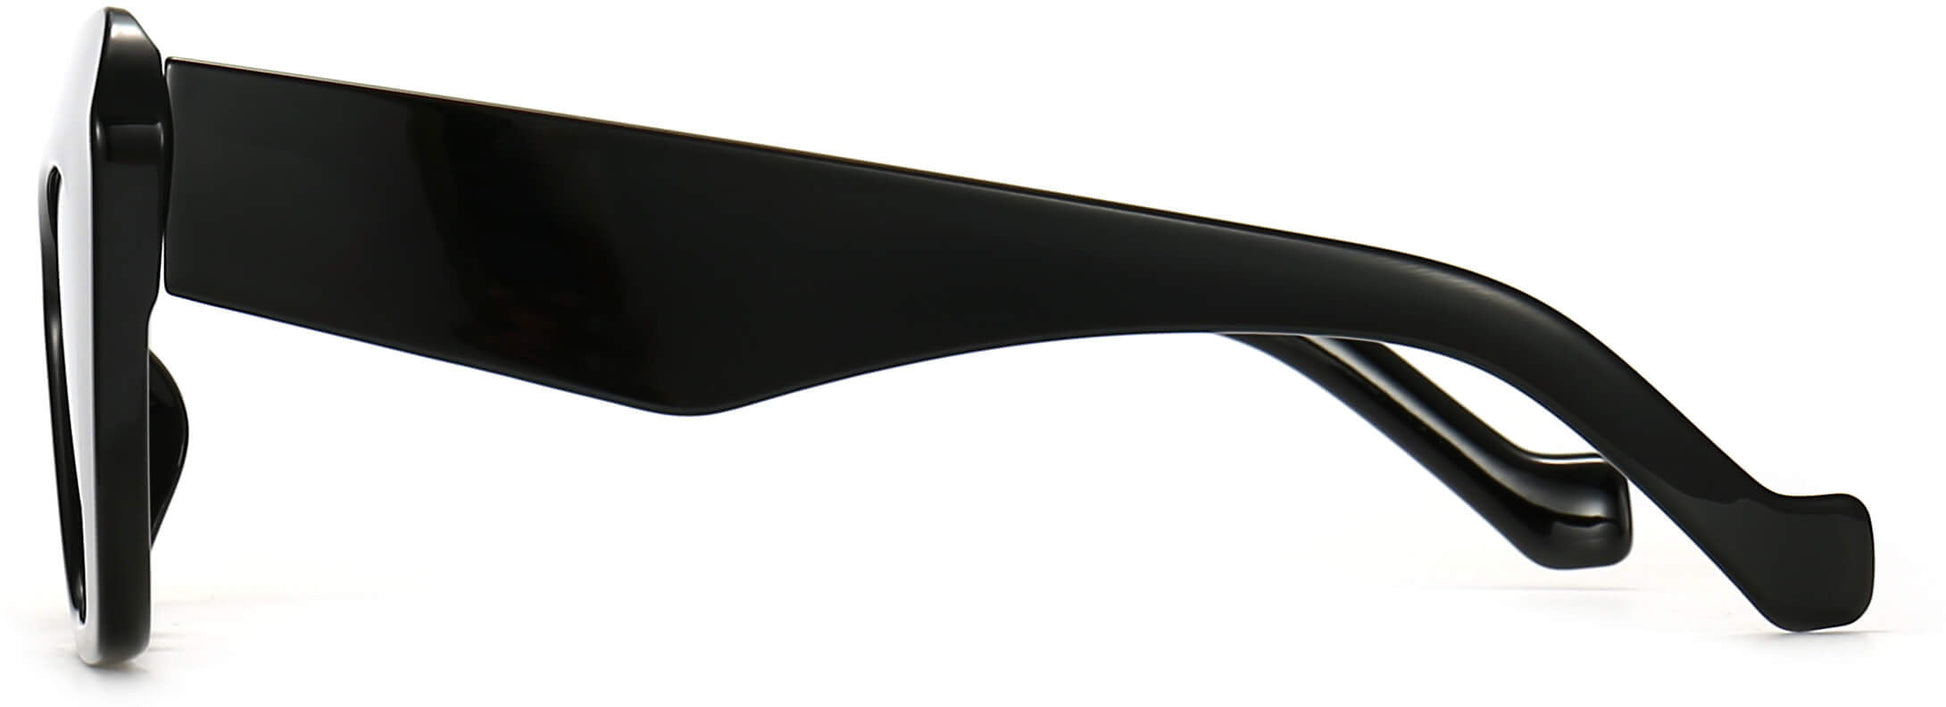 Mimi Black Plastic Sunglasses from ANRRI